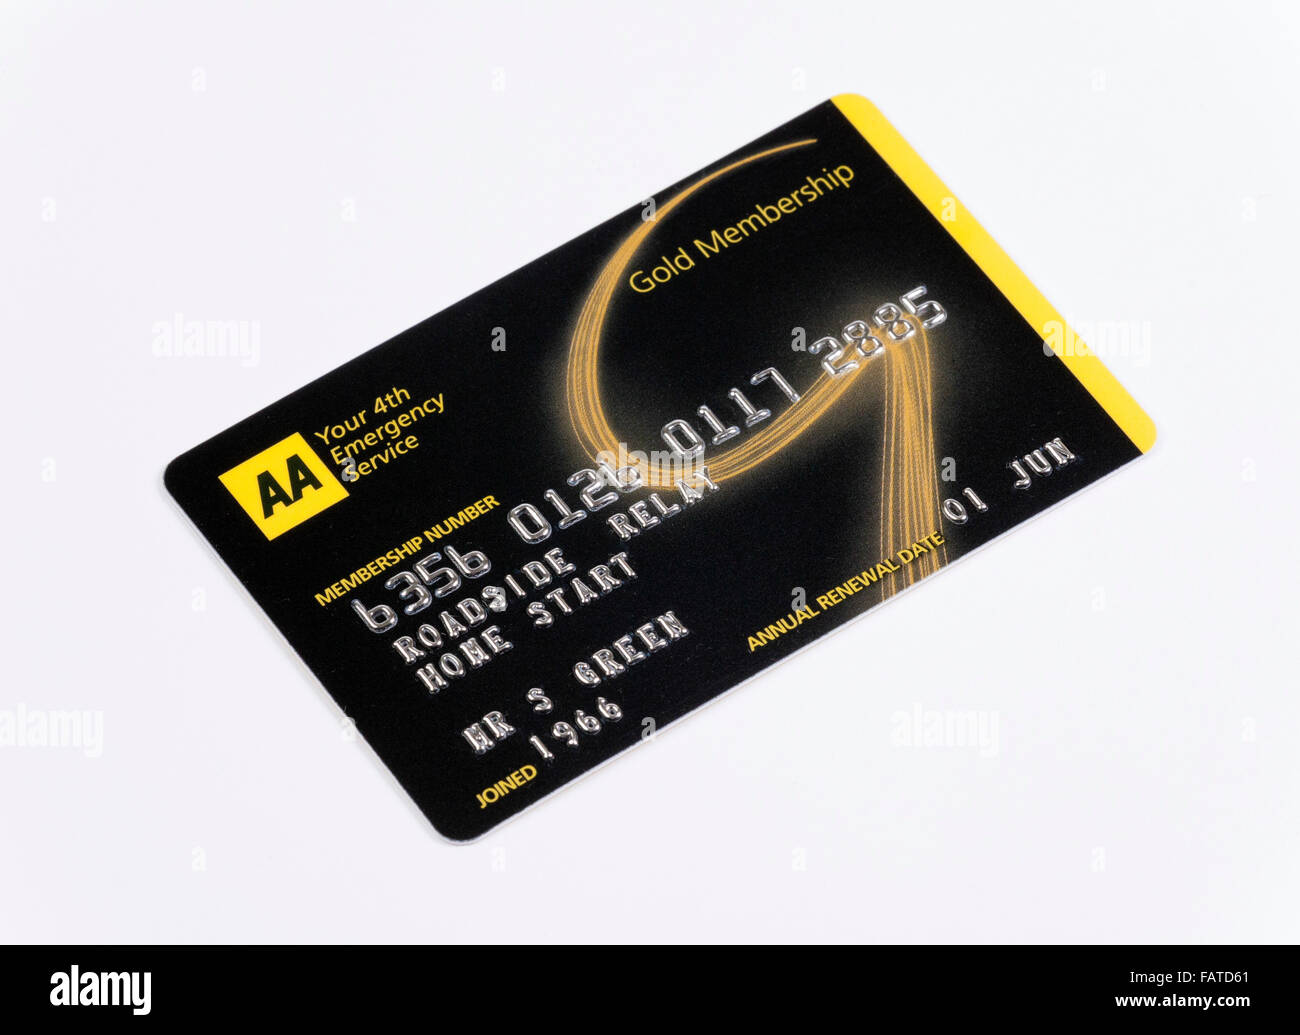 AA elemento membership card Foto Stock